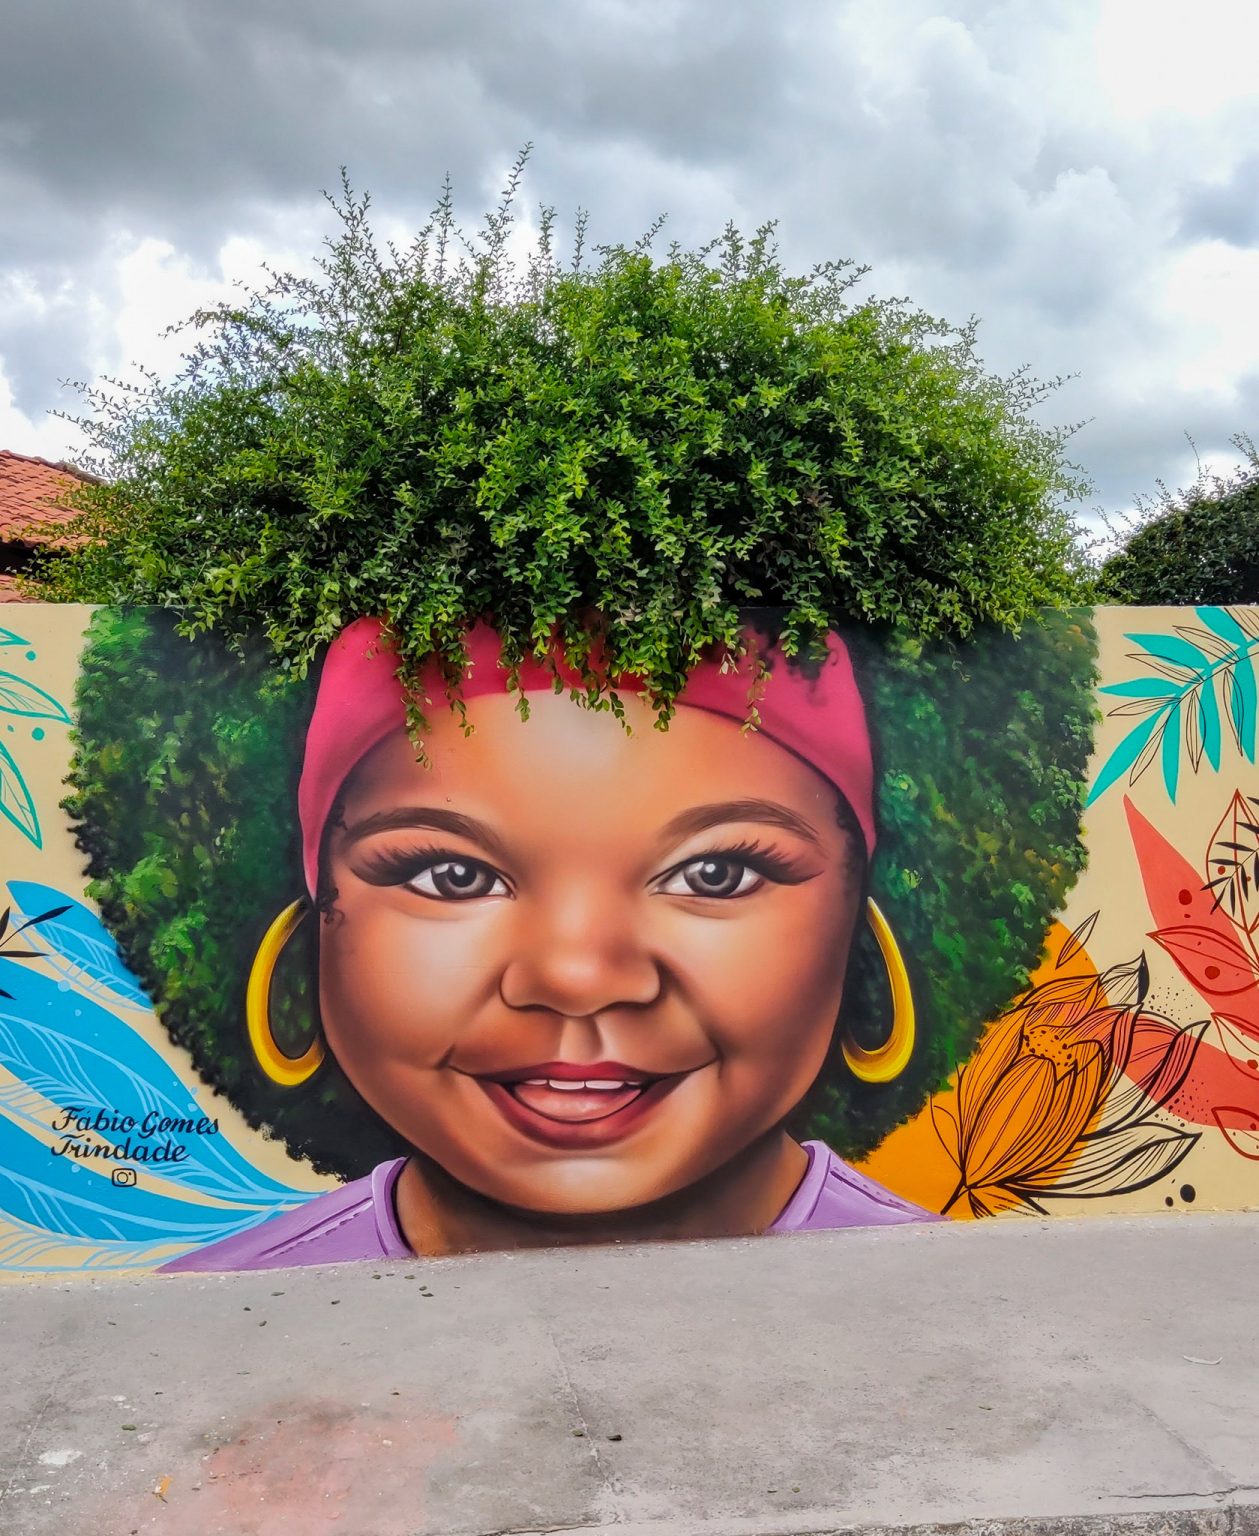 Environmental Street Art by Fábio Gomes Trindade | Daily design ...